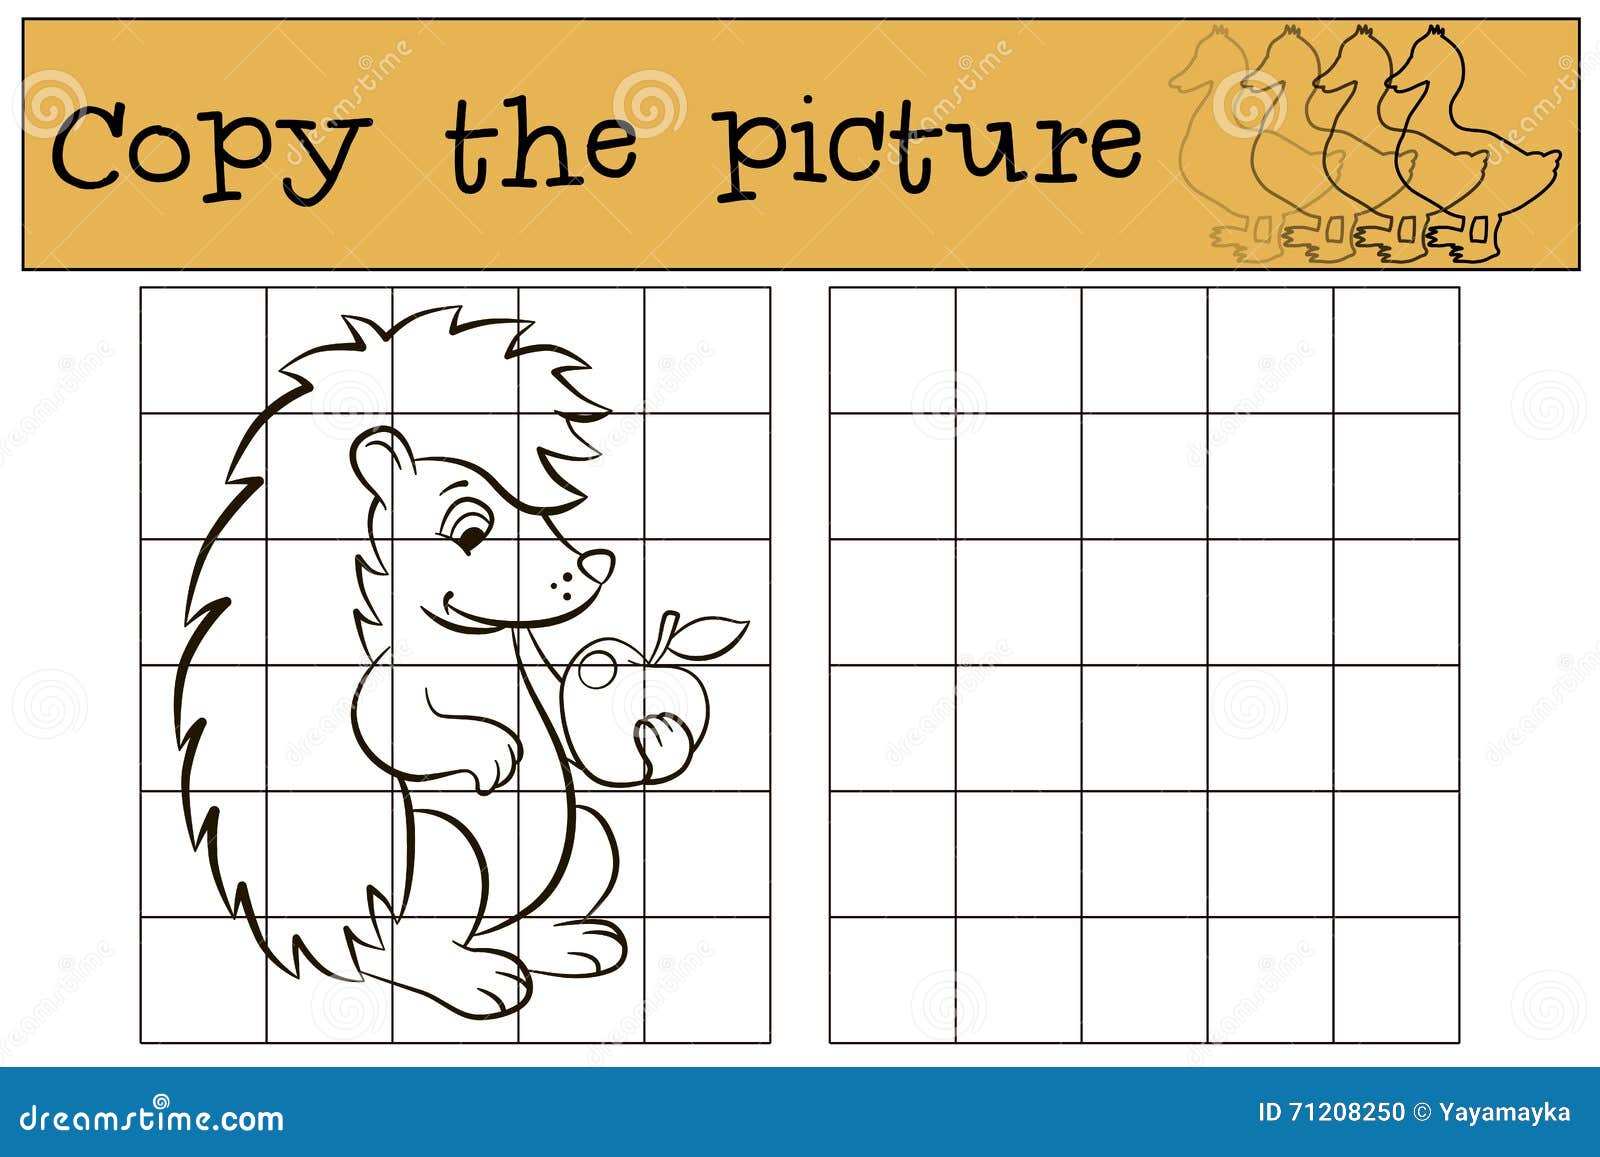 children games: copy the picture. little cute hedgehog.